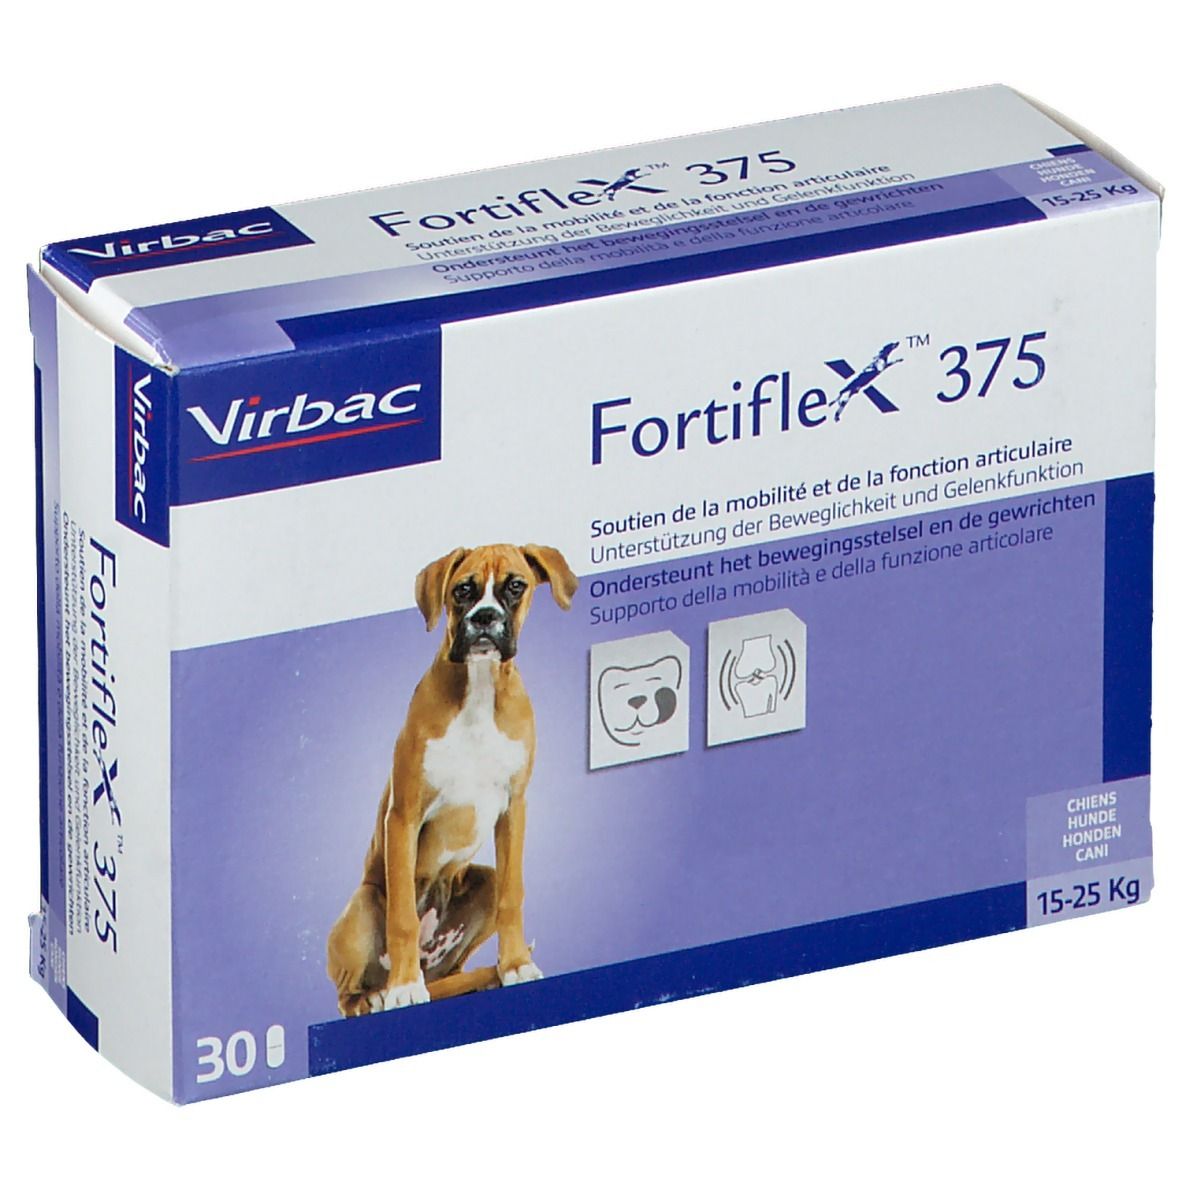 Virbac Fortiflex™ 375 für Hunde > 15-25 Kg